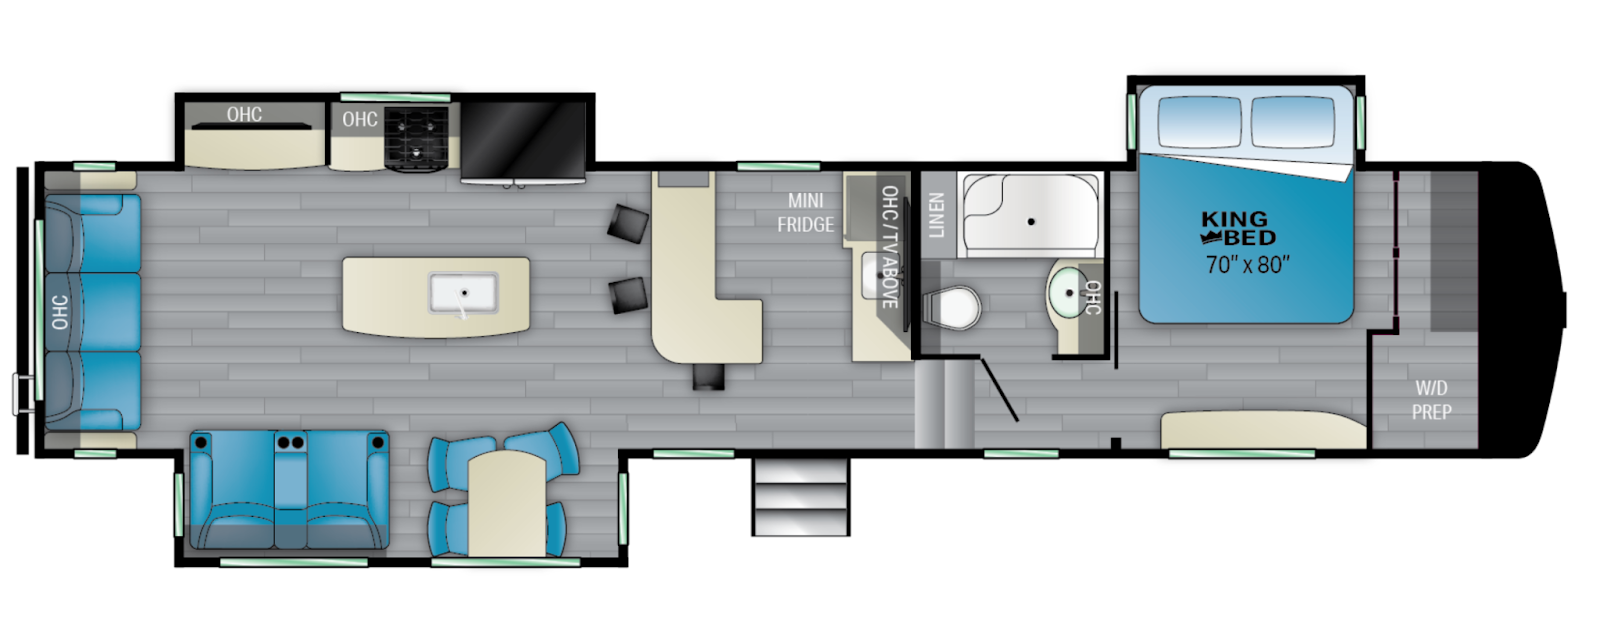 Heartland Elkridge 37BAR 5th wheel floorplan with prep space for washer and dryer